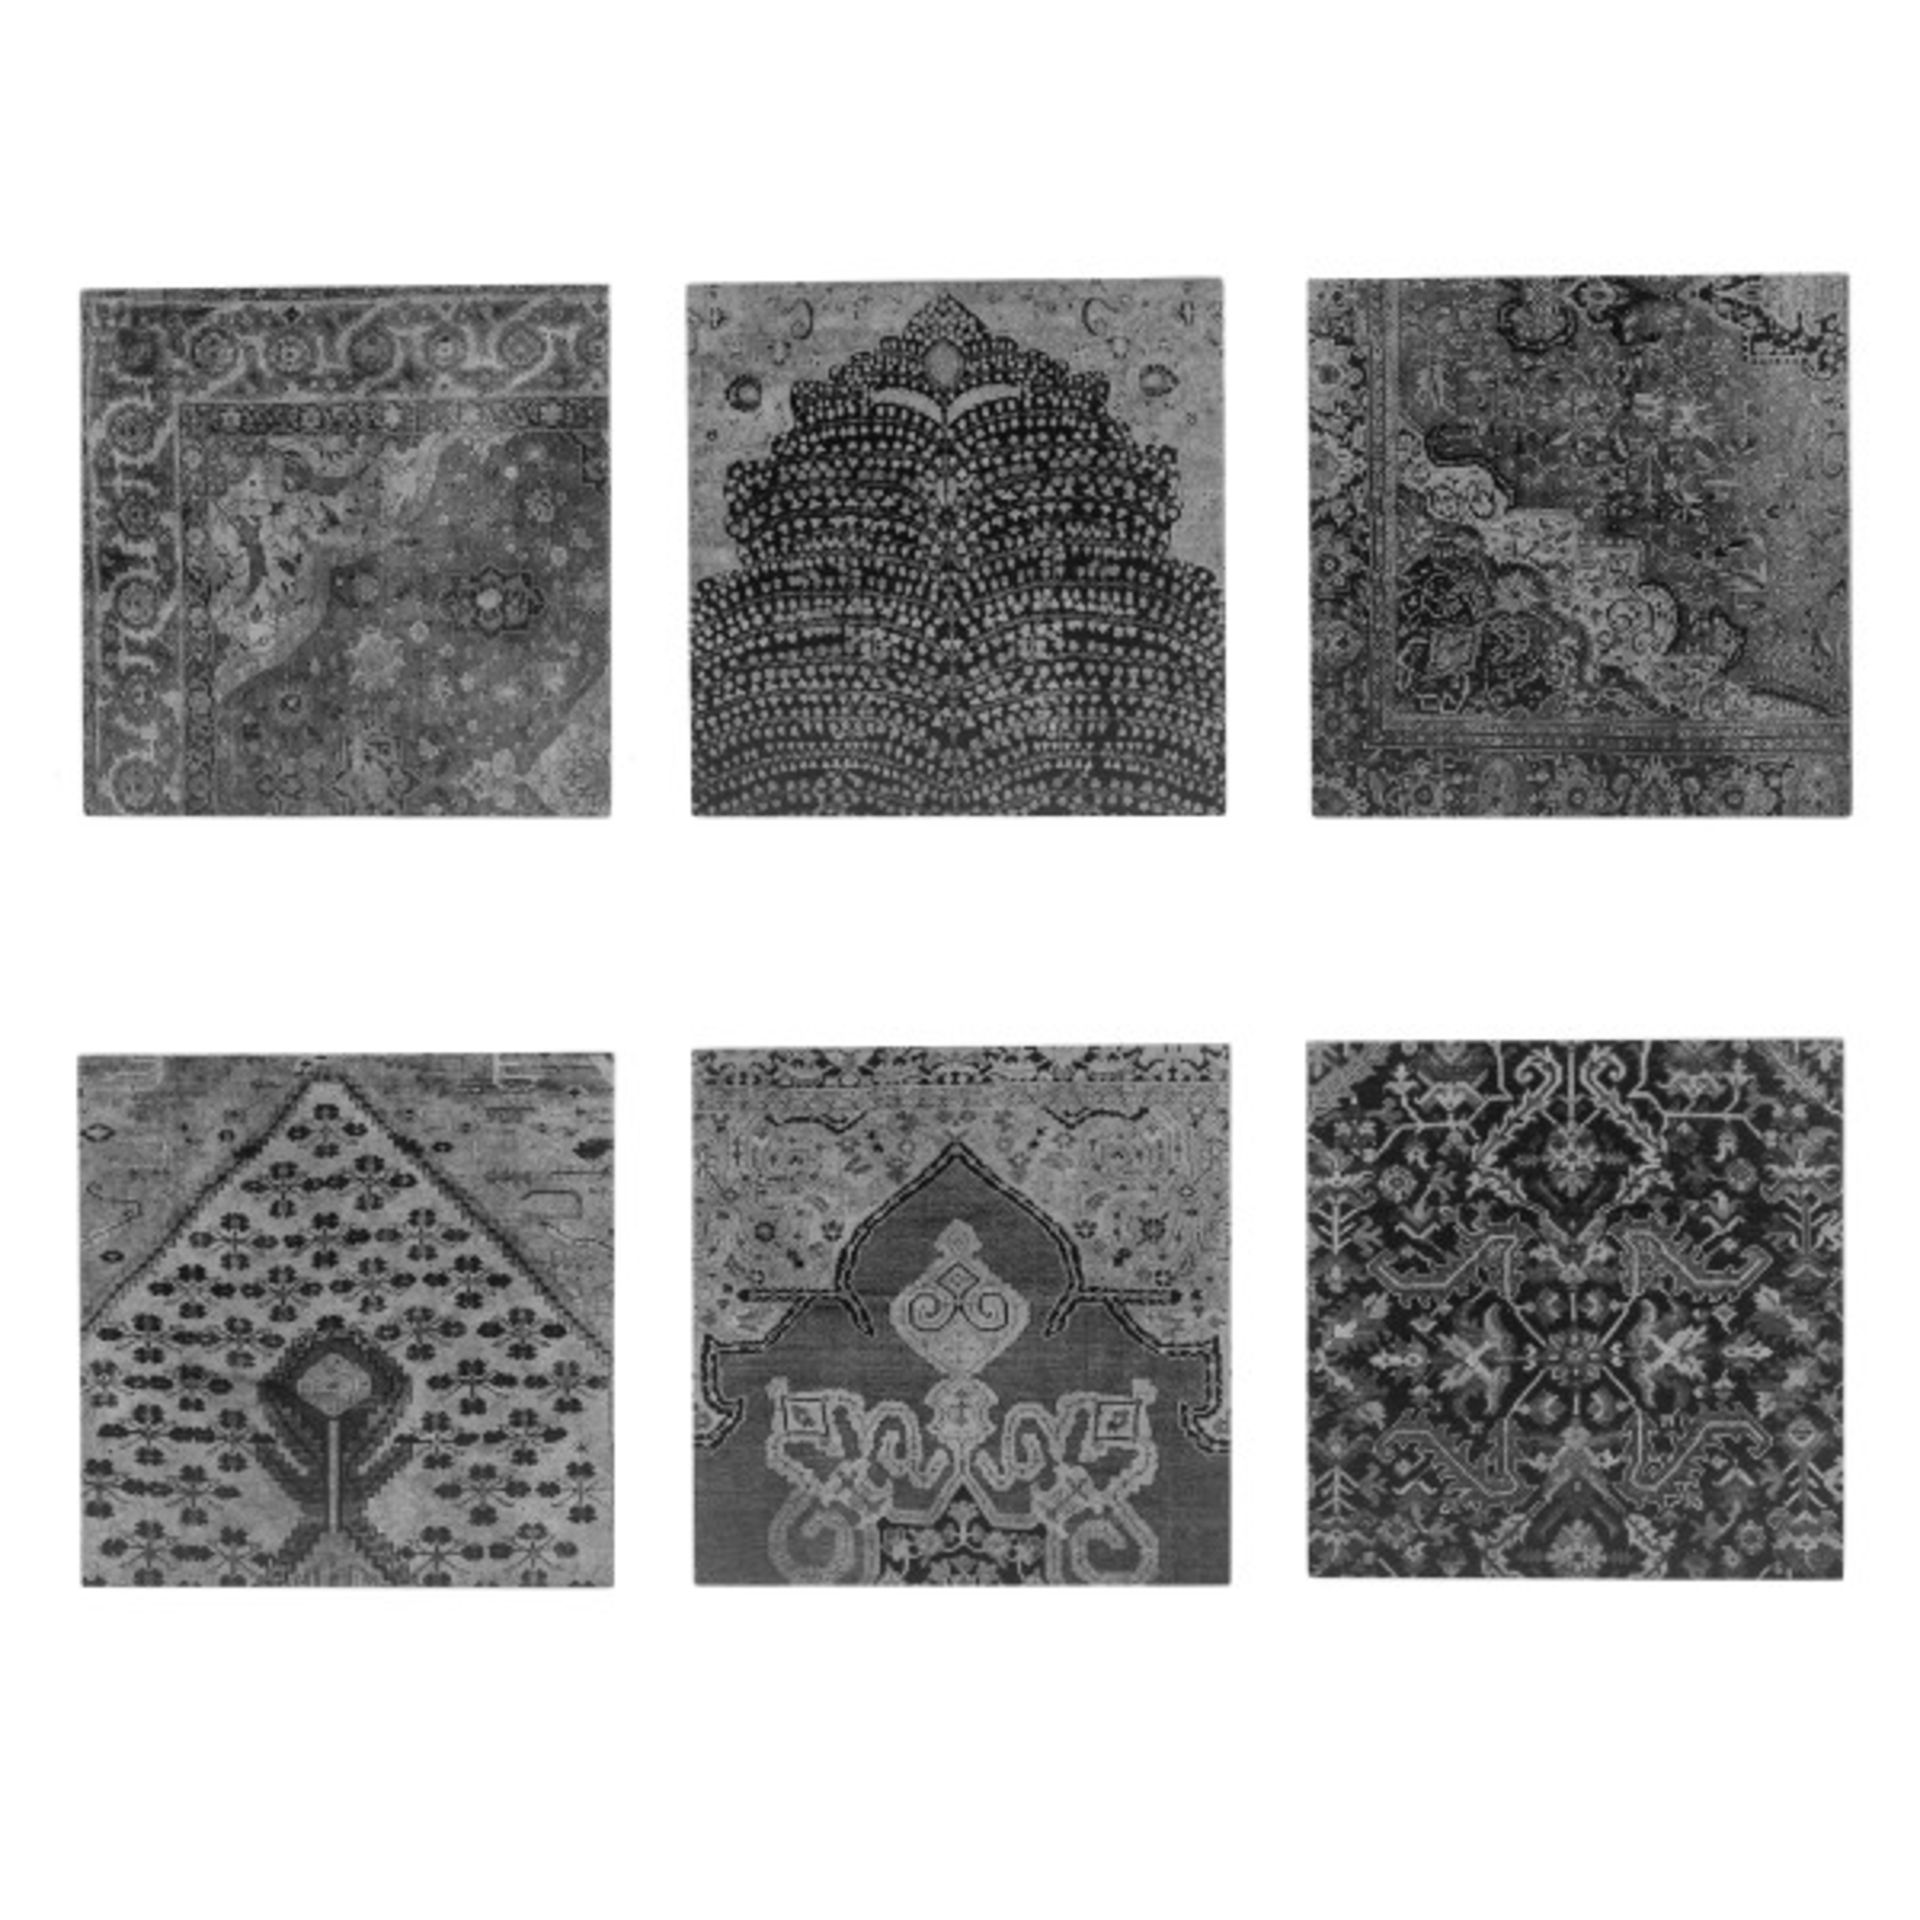 Coup & Co Art Persian Persian Carpet Wall Tiles Black & White Set of 6 35.1 x 4.6 x 35.1 CM-